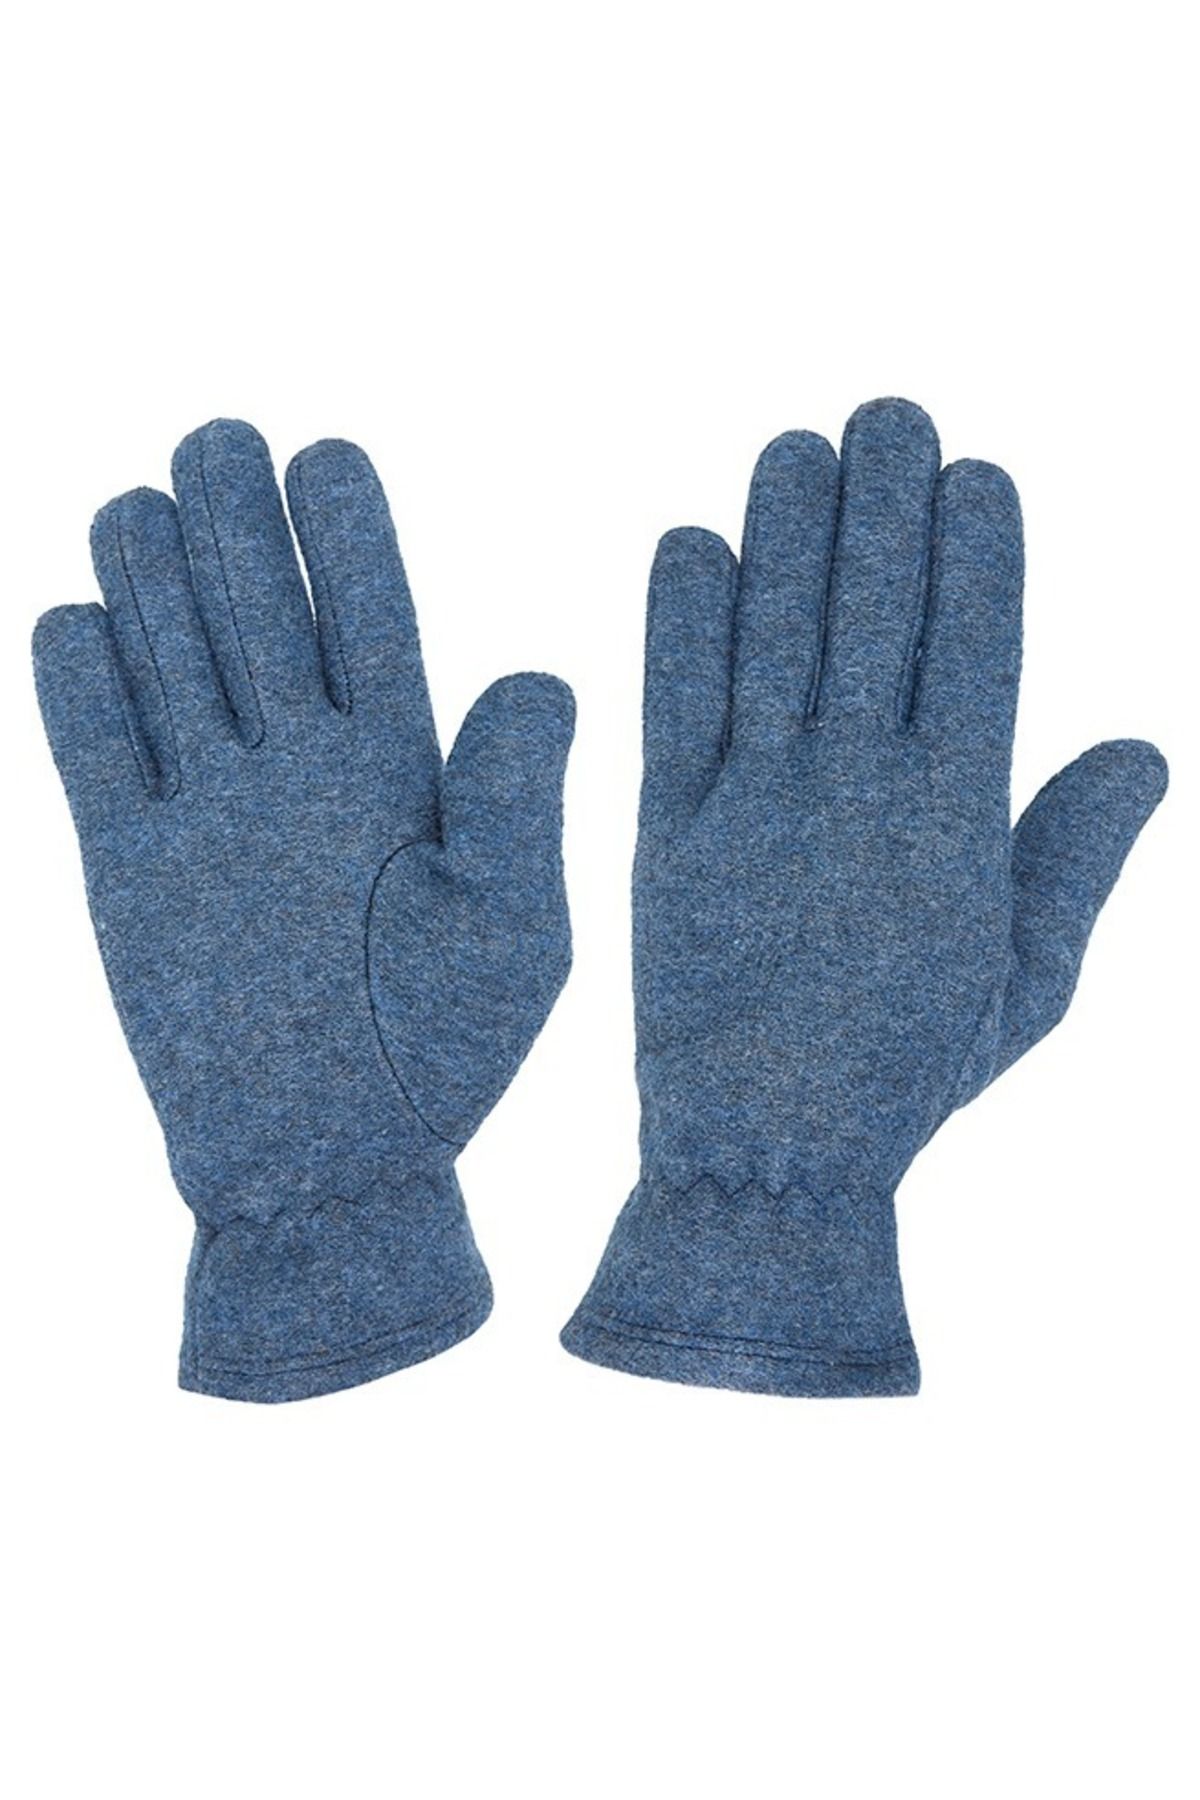 Blackspade Aw21 Unisex Gloves 30777_4419_Size